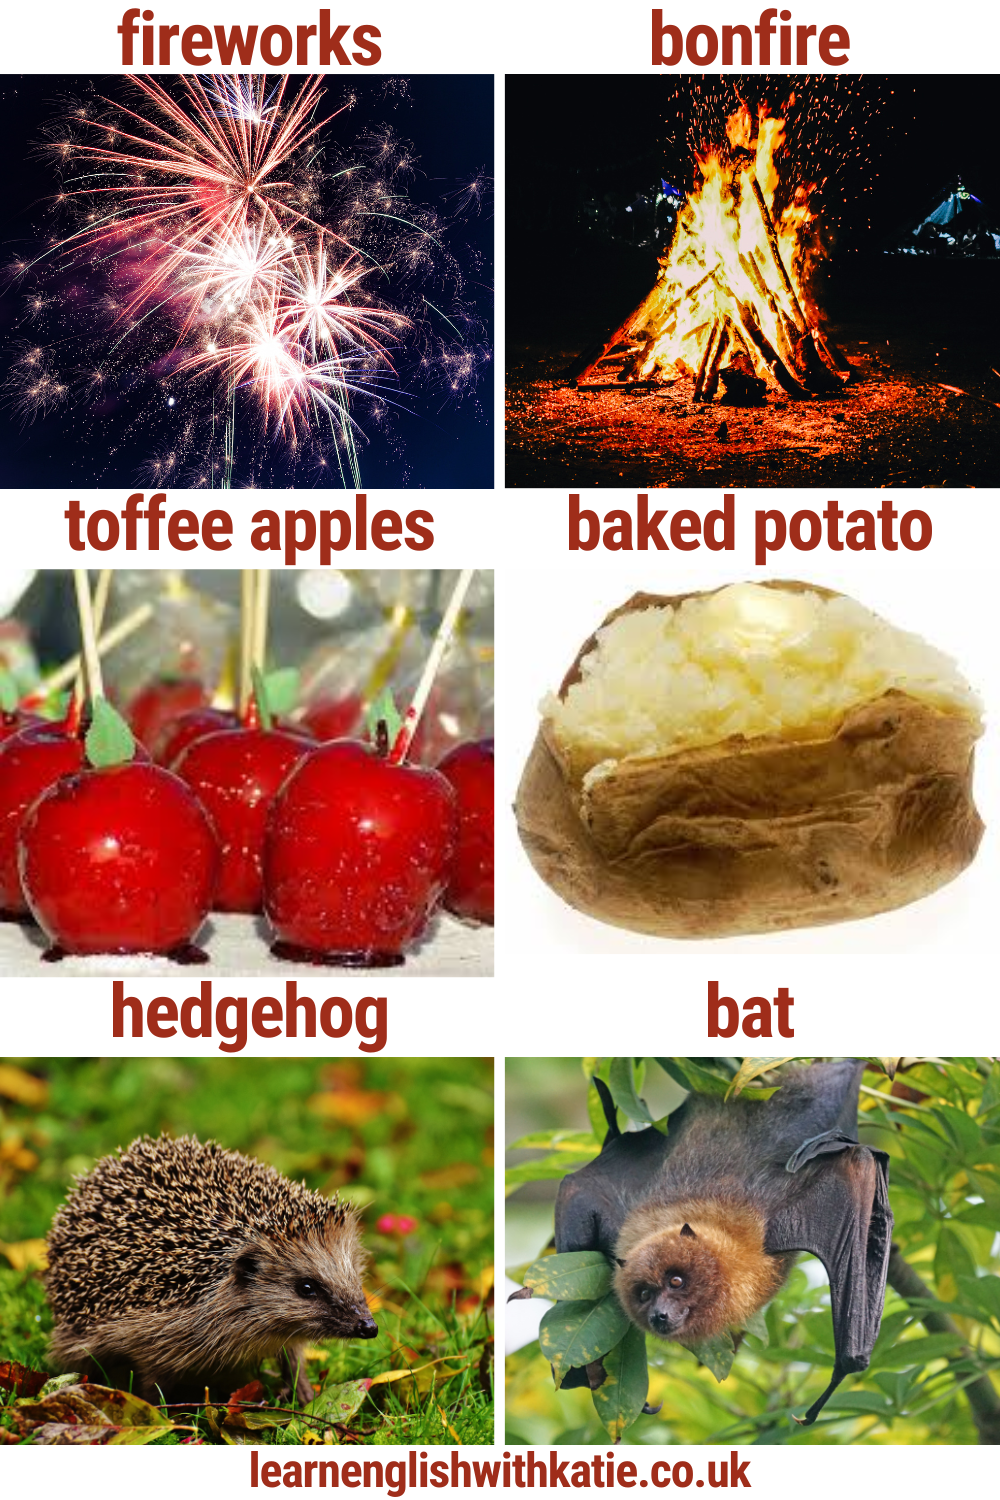 Picture dictionary showing fireworks, bonfire, toffee apples, baked potato, hedgehog, bat